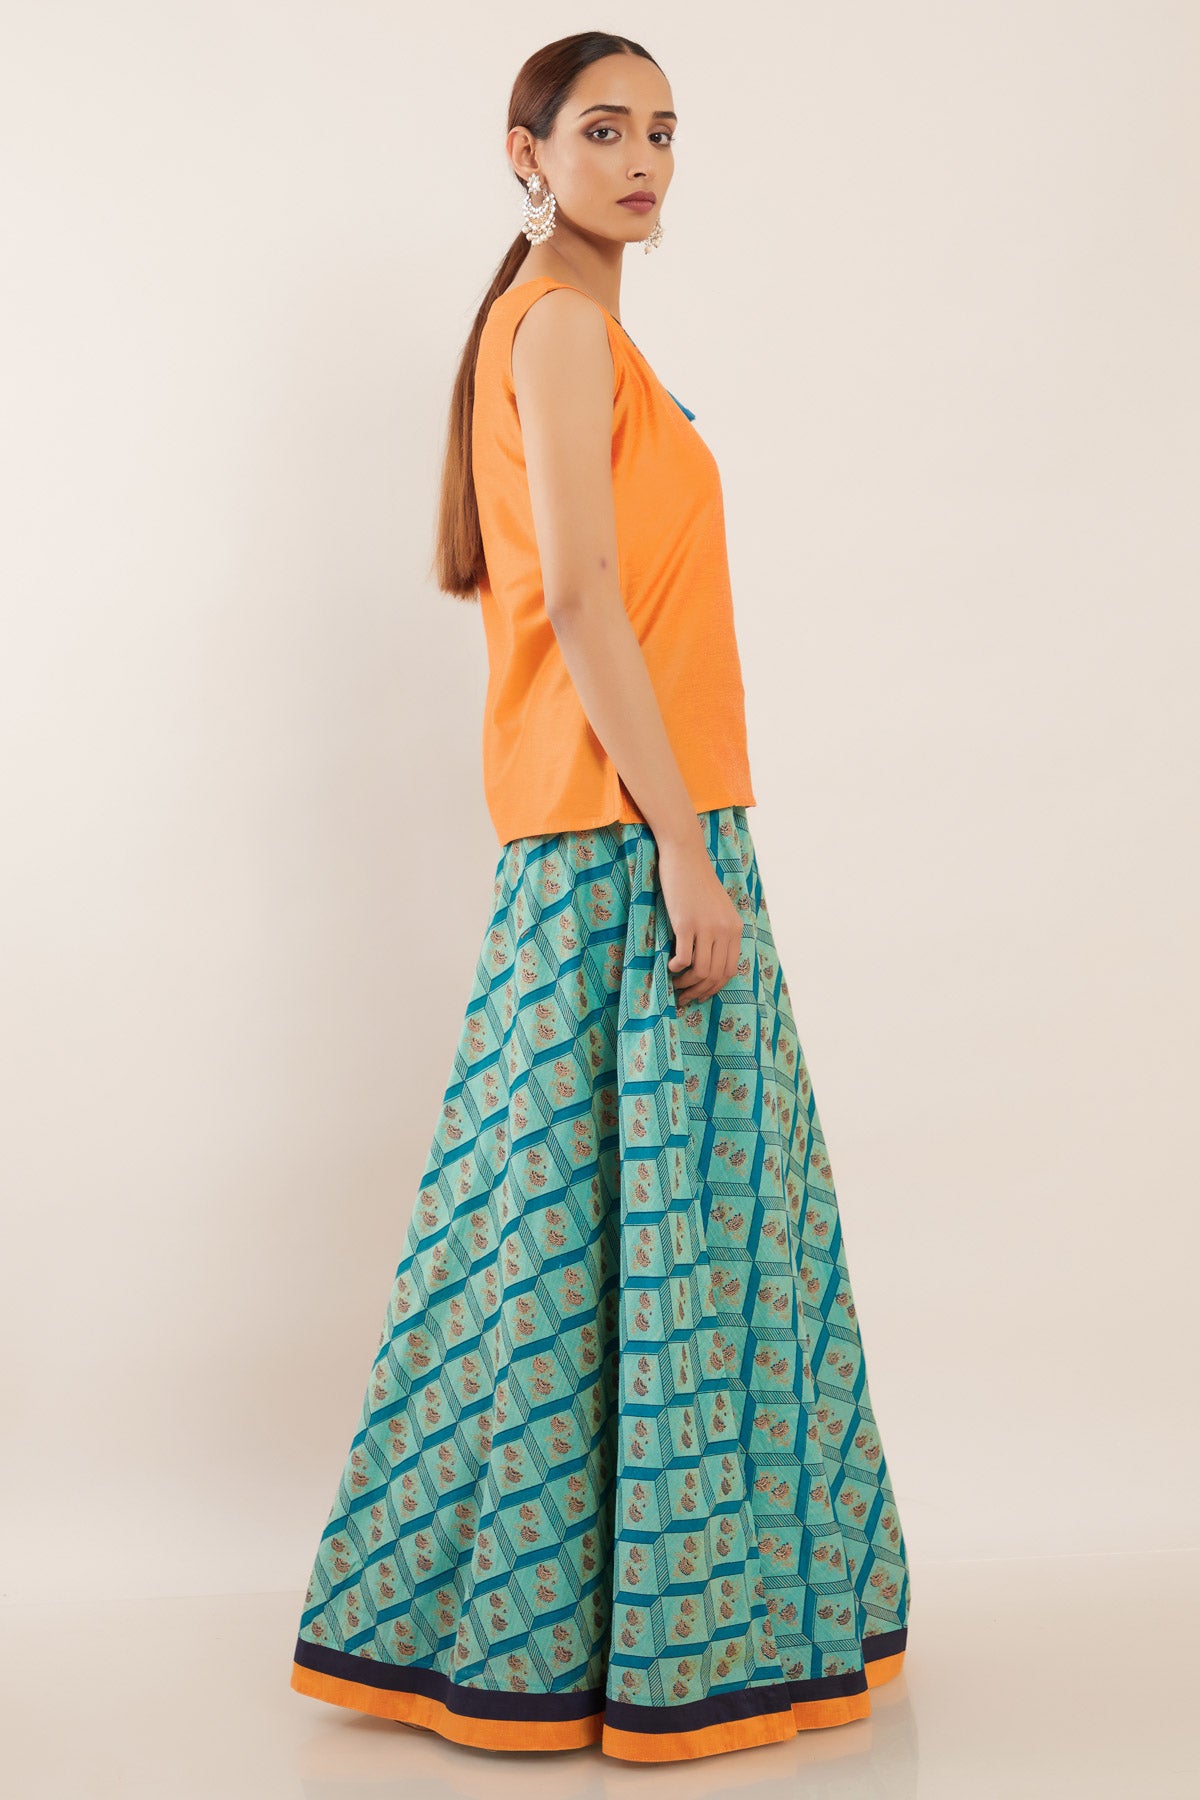 Geometric & Floral Foil Printed Women's Skirt Set - Mustard & Teal